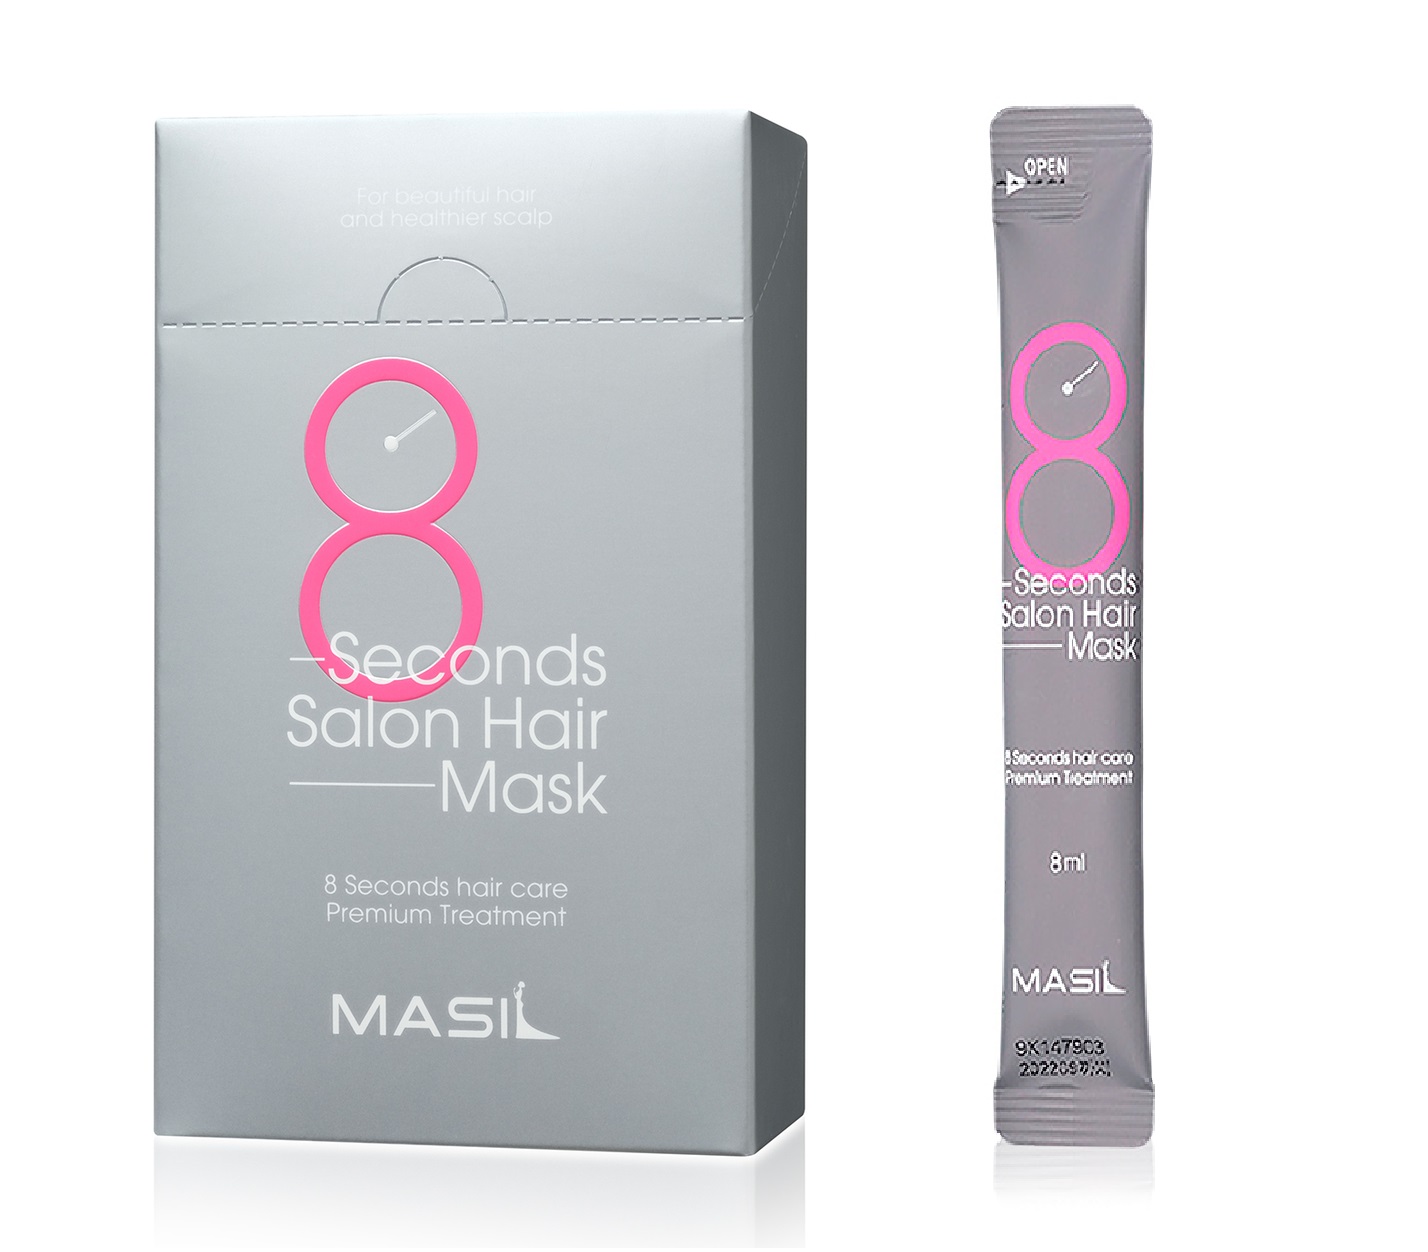 Корейская маска 8 секунд. Masil маска для волос салонный эффект за 8 секунд, 8 мл*20 шт. Masil маска 8 секунд. Маска 8 секунд Корея. Masil маска для волос салонный эффект за 8 секунд - 8 seconds Salon hair Mask, 100мл.